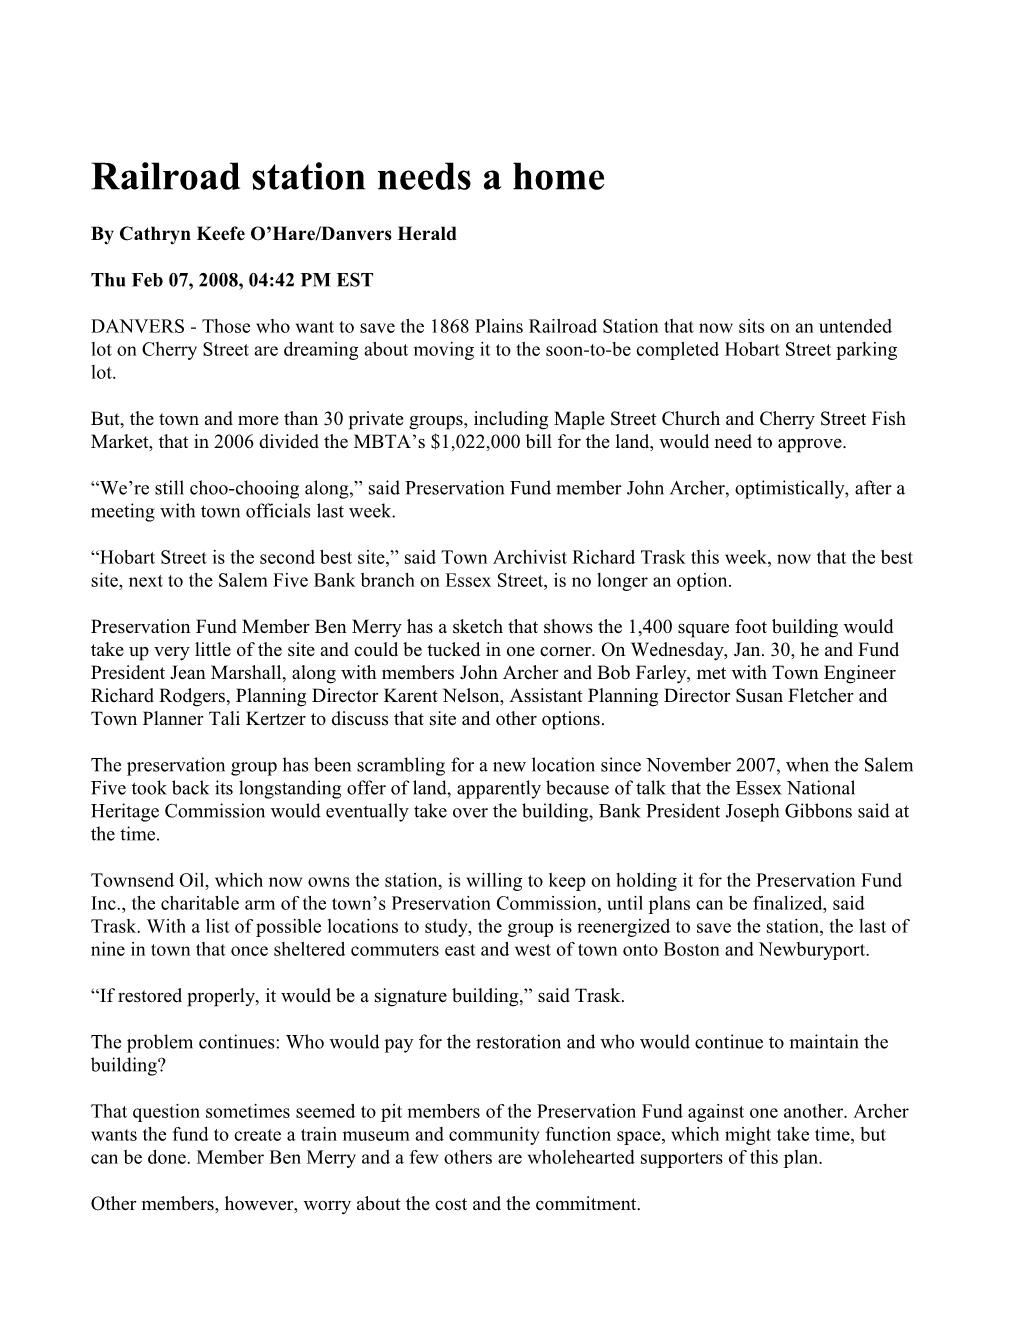 Railroad Station Needs a Home